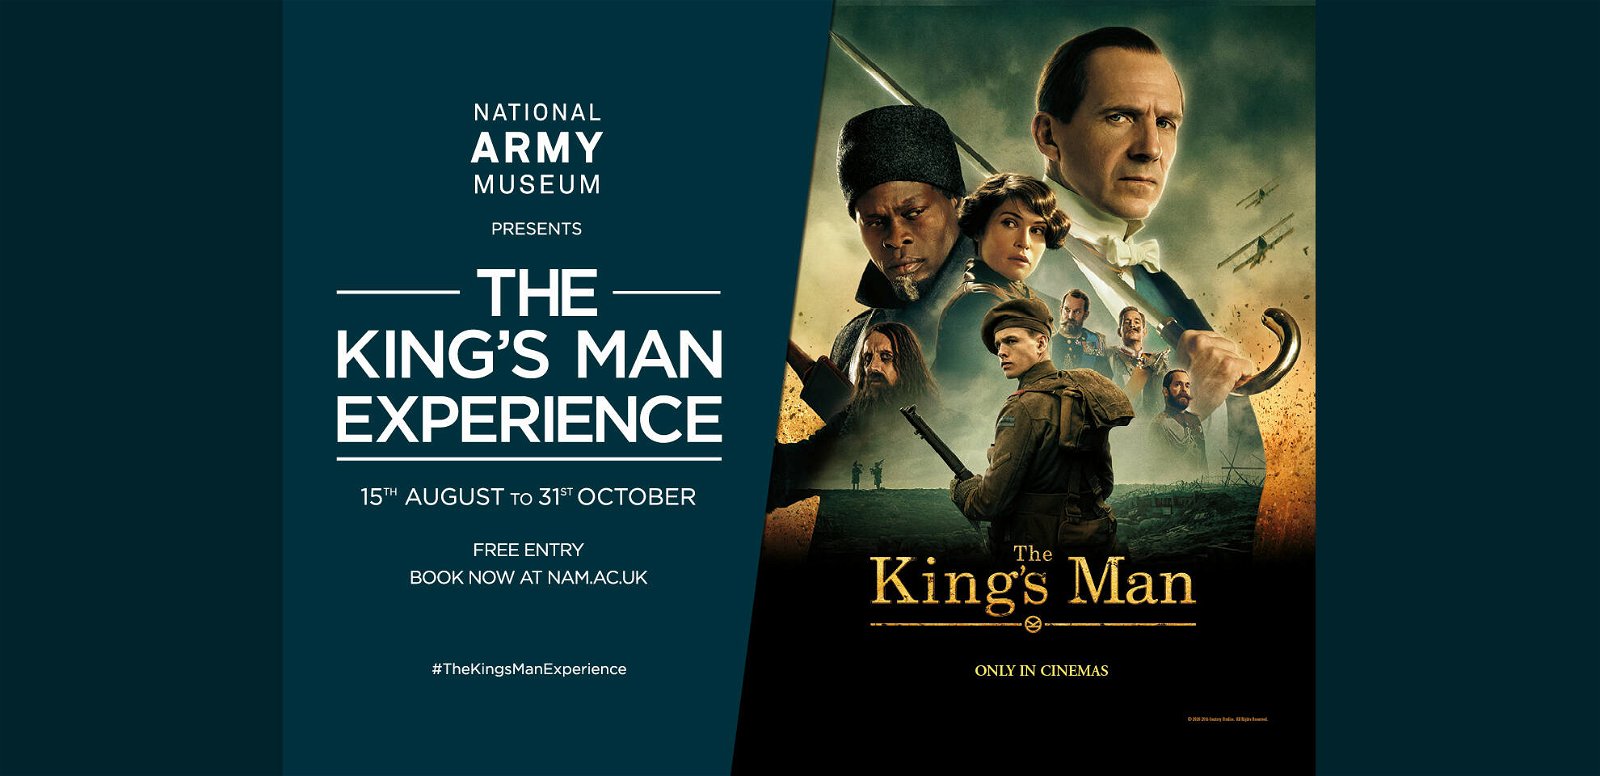 Immagine di The King's Man - Le origini arriva al National Army Museum di Londra